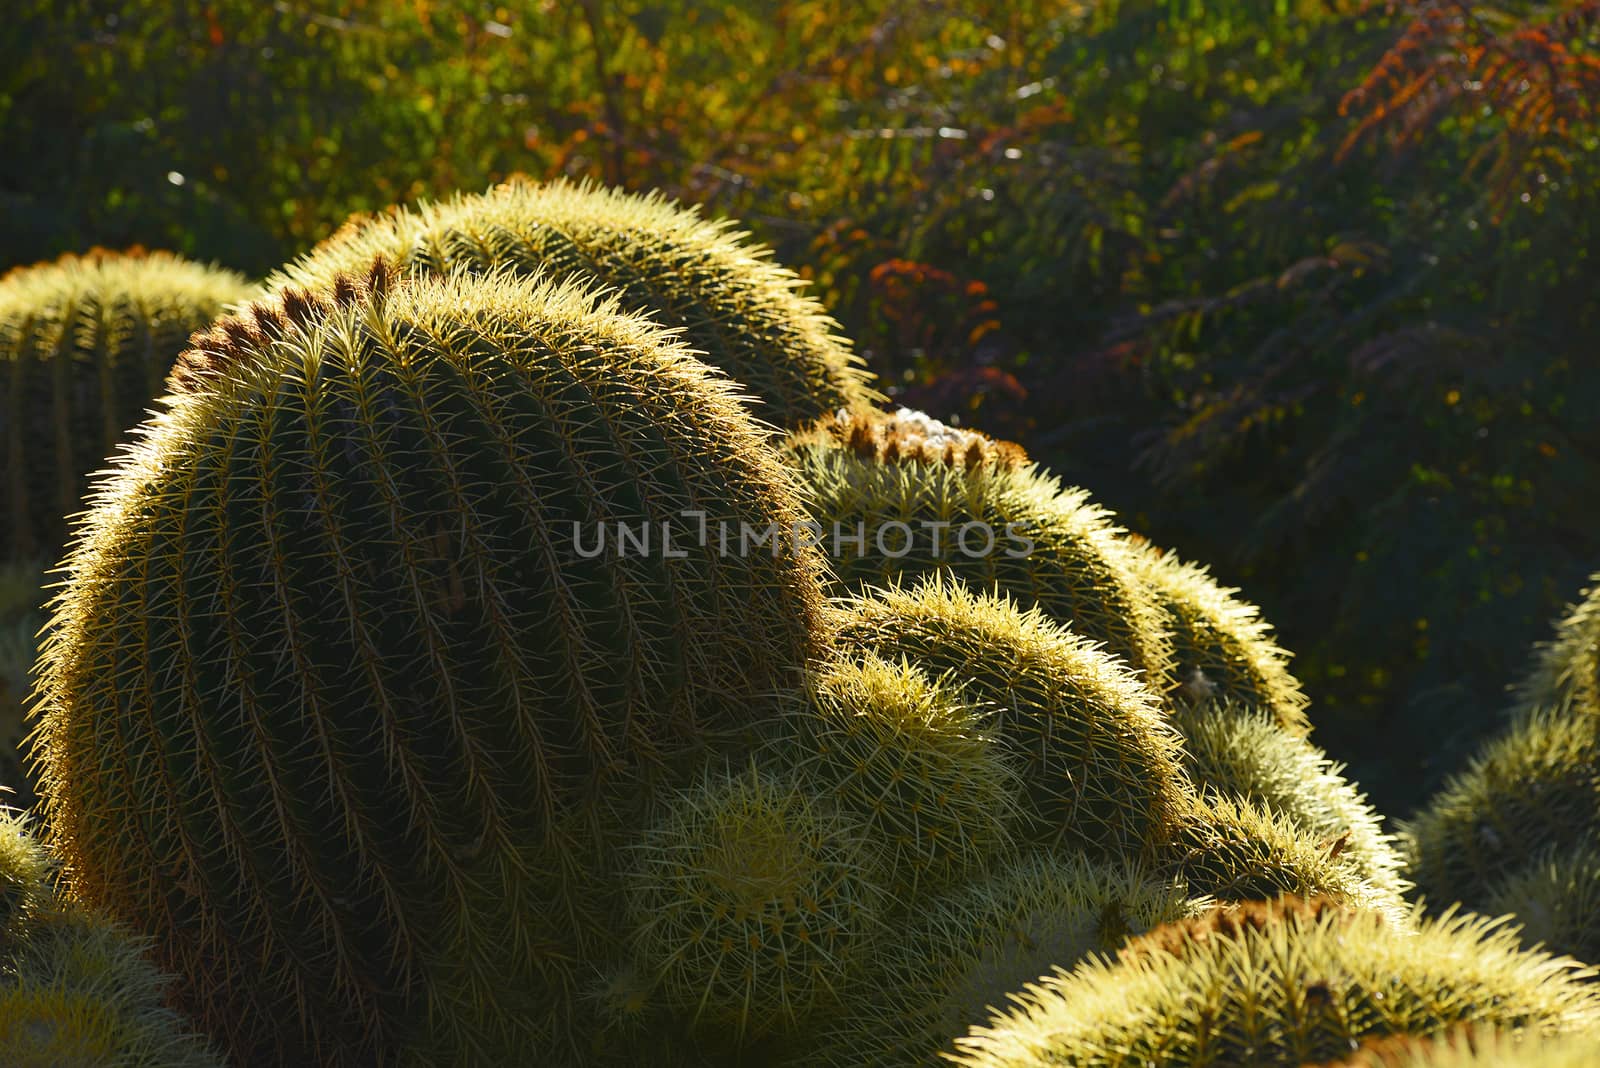 yellow glowing cactus in a garden in southern california